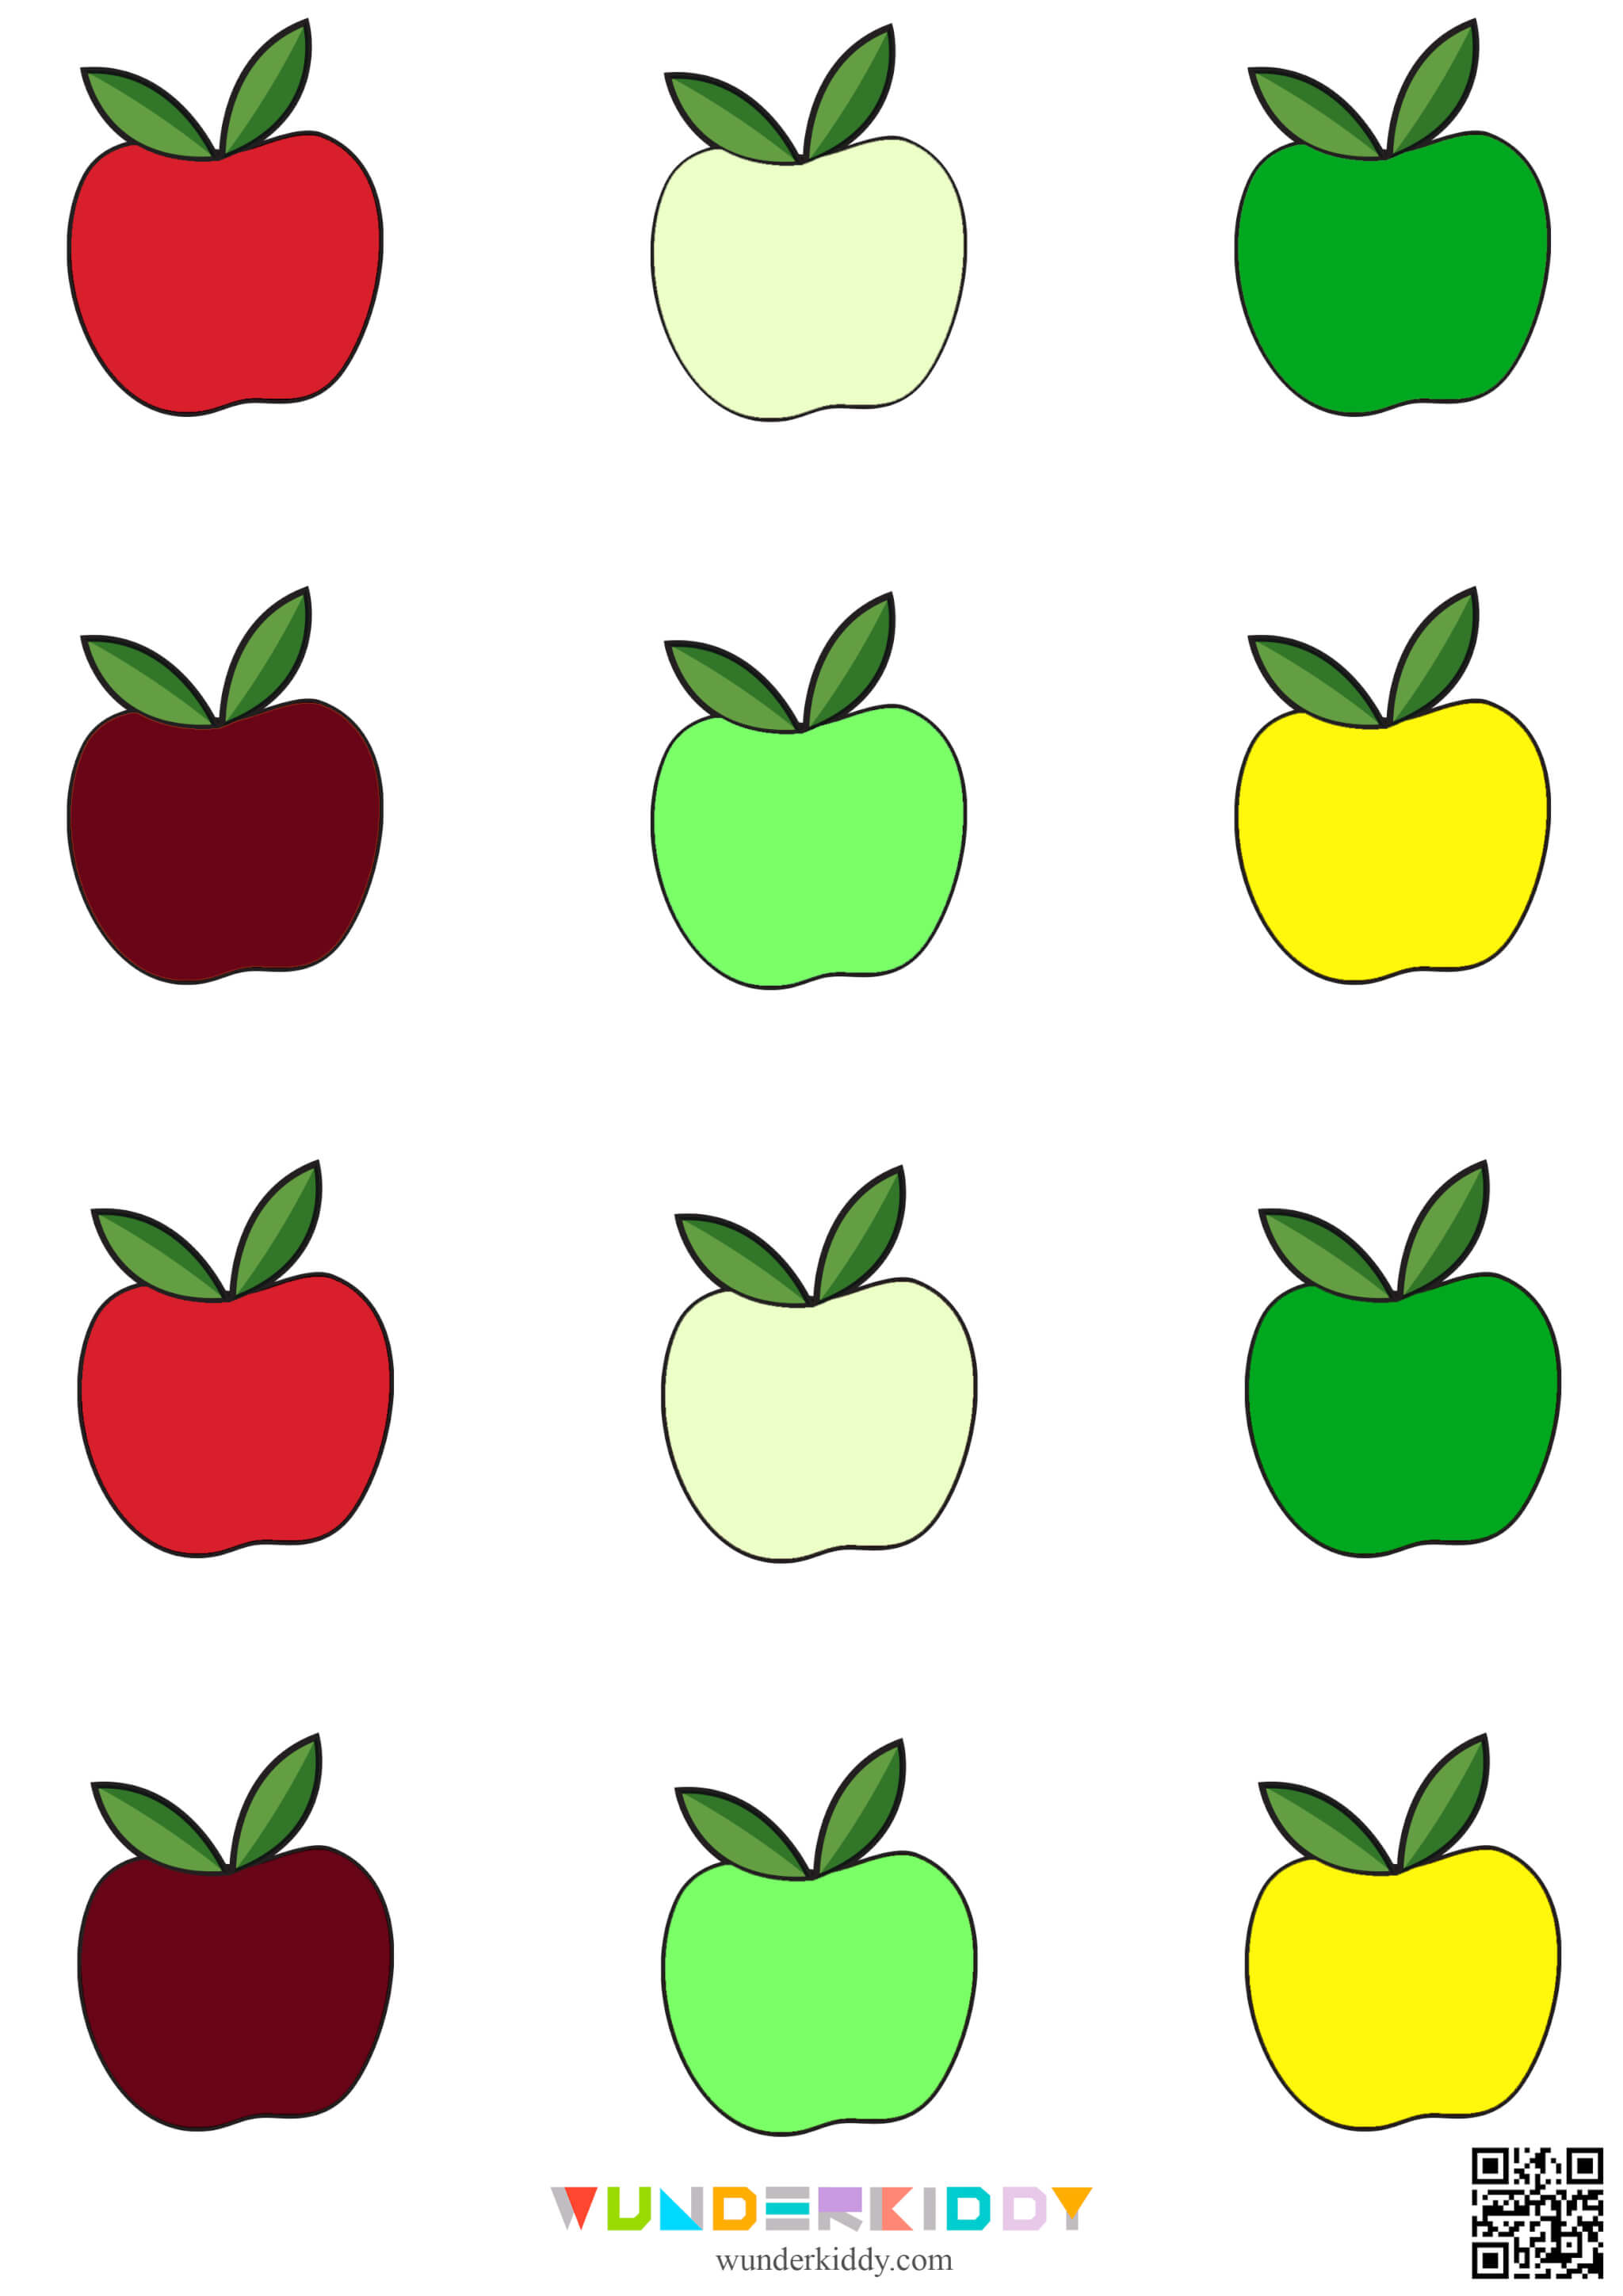 Apple Tree Pattern Activity - Image 3